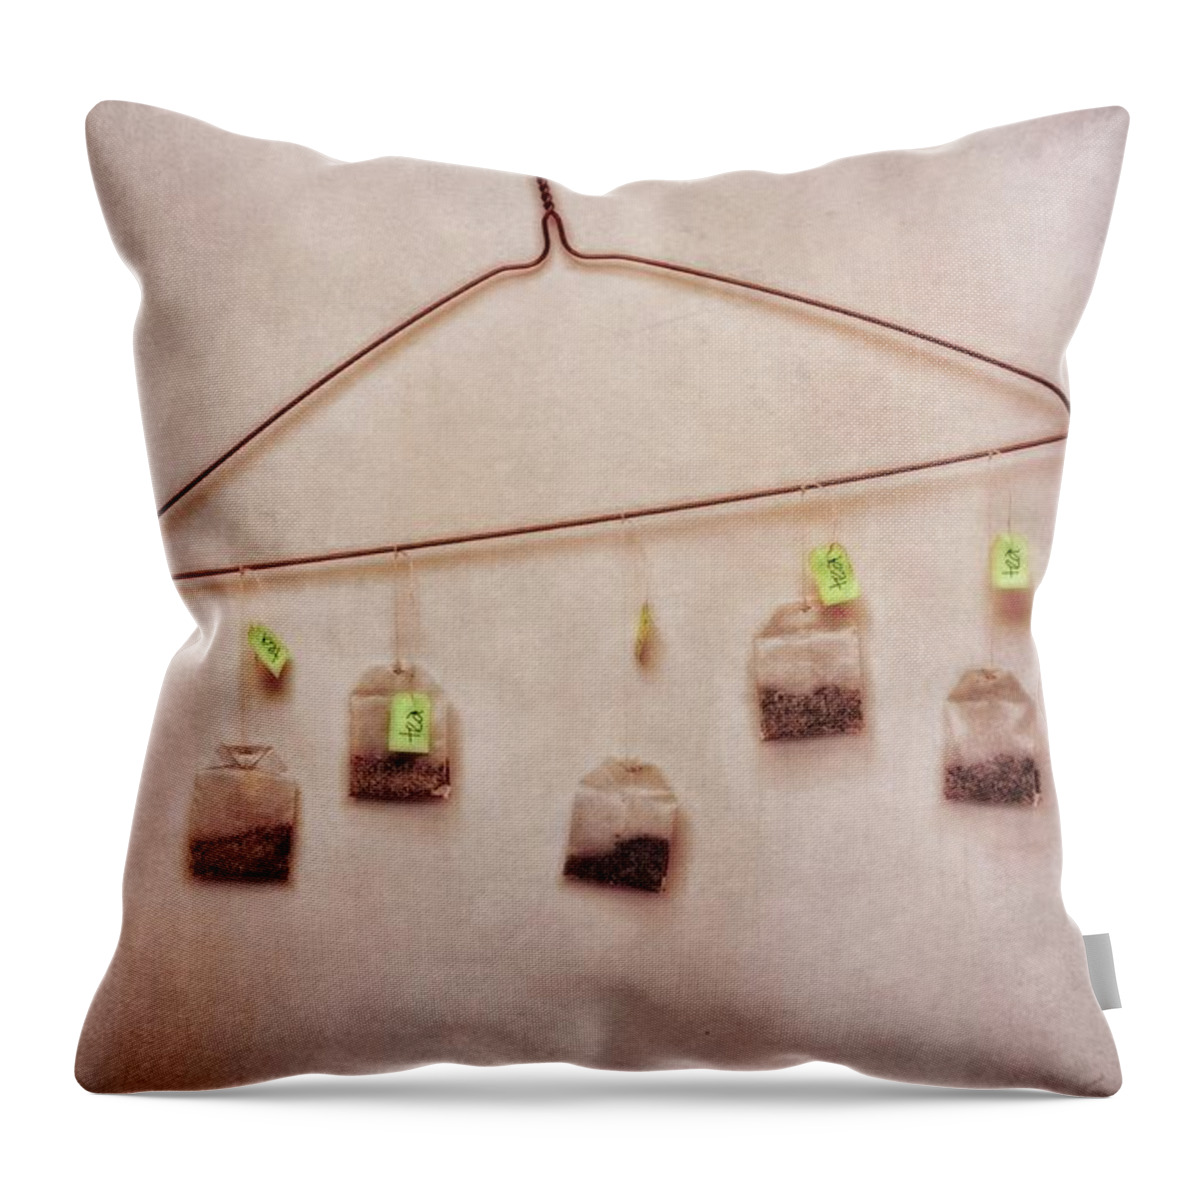 Tea Throw Pillow featuring the photograph Tea Bags by Priska Wettstein